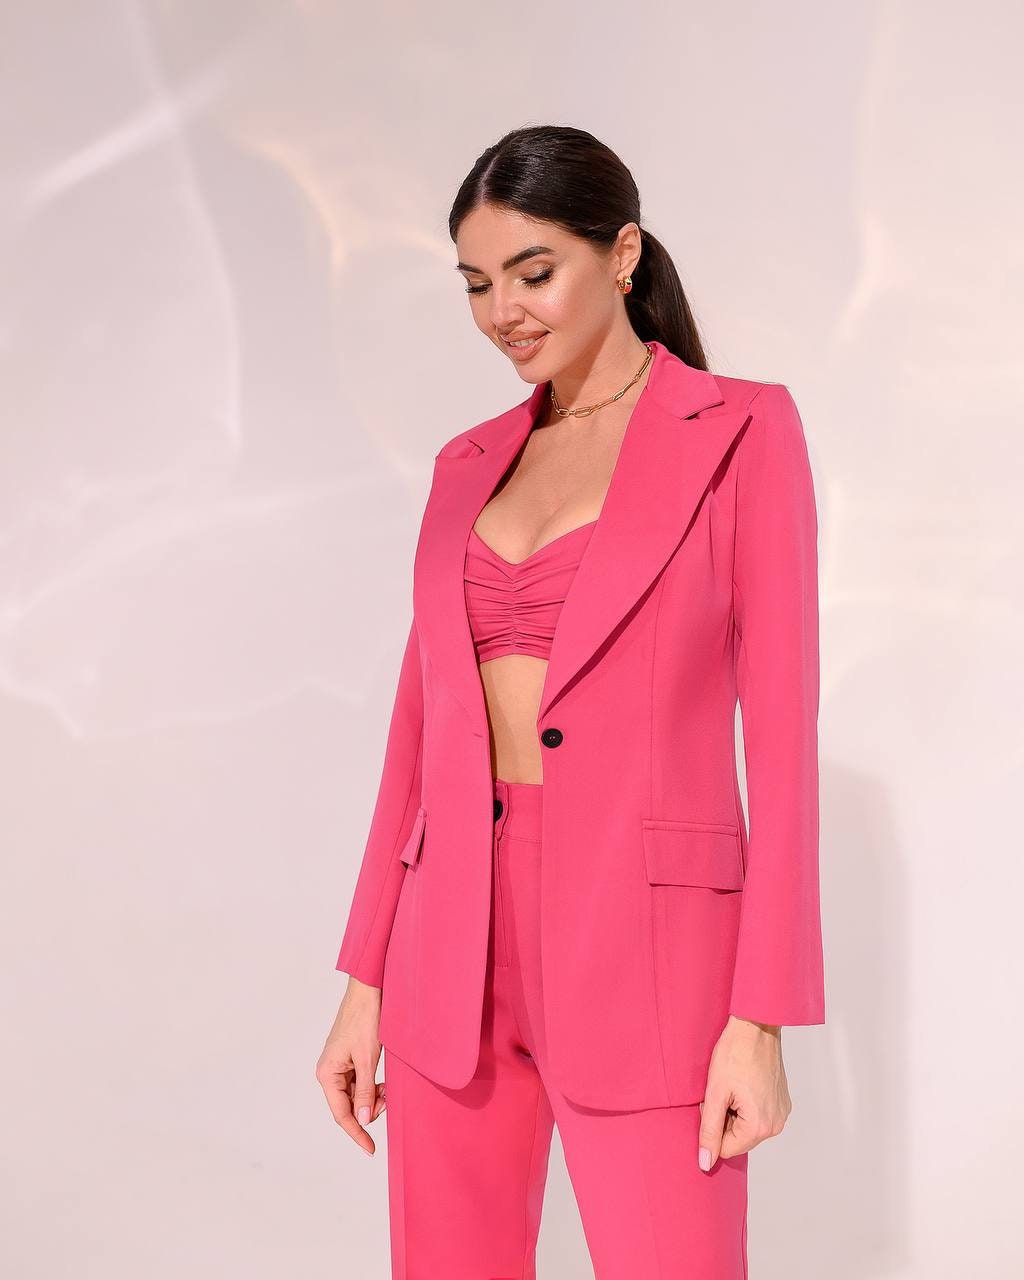 Hot Pink Women Suit, Three Piece Suit, Blazer Women, Wedding Guest